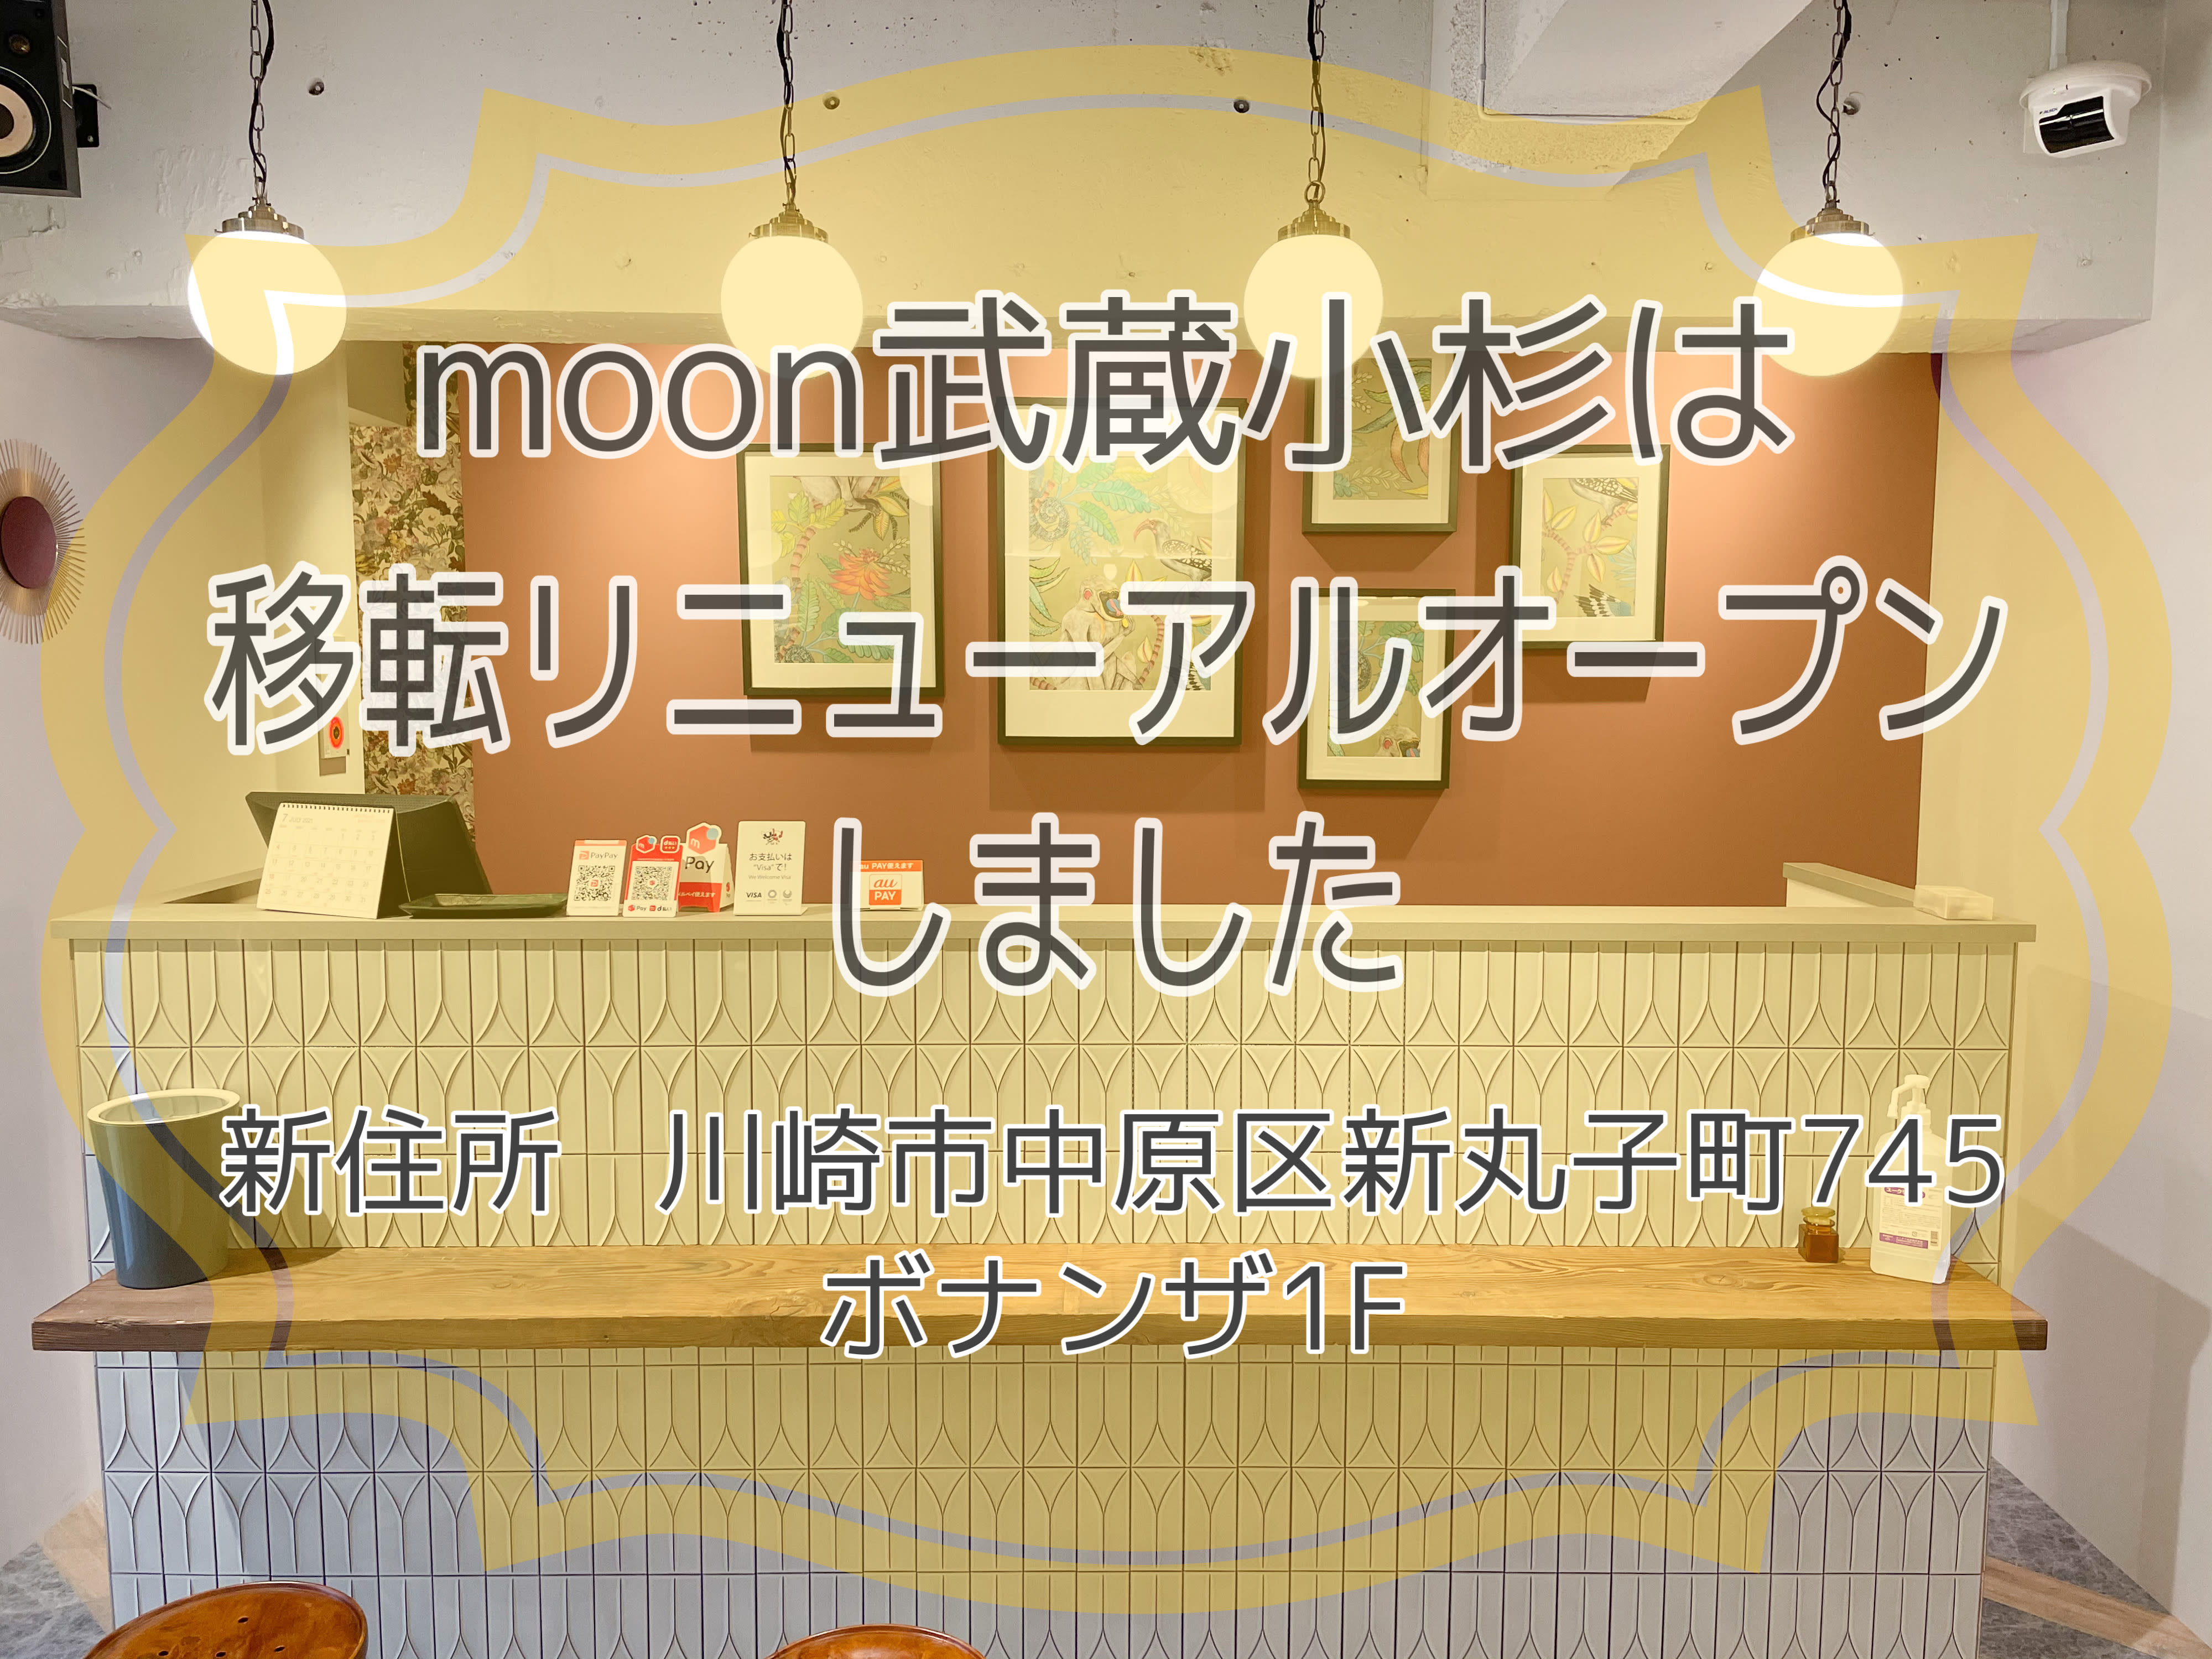 moon 【武蔵小杉】のアイキャッチ画像